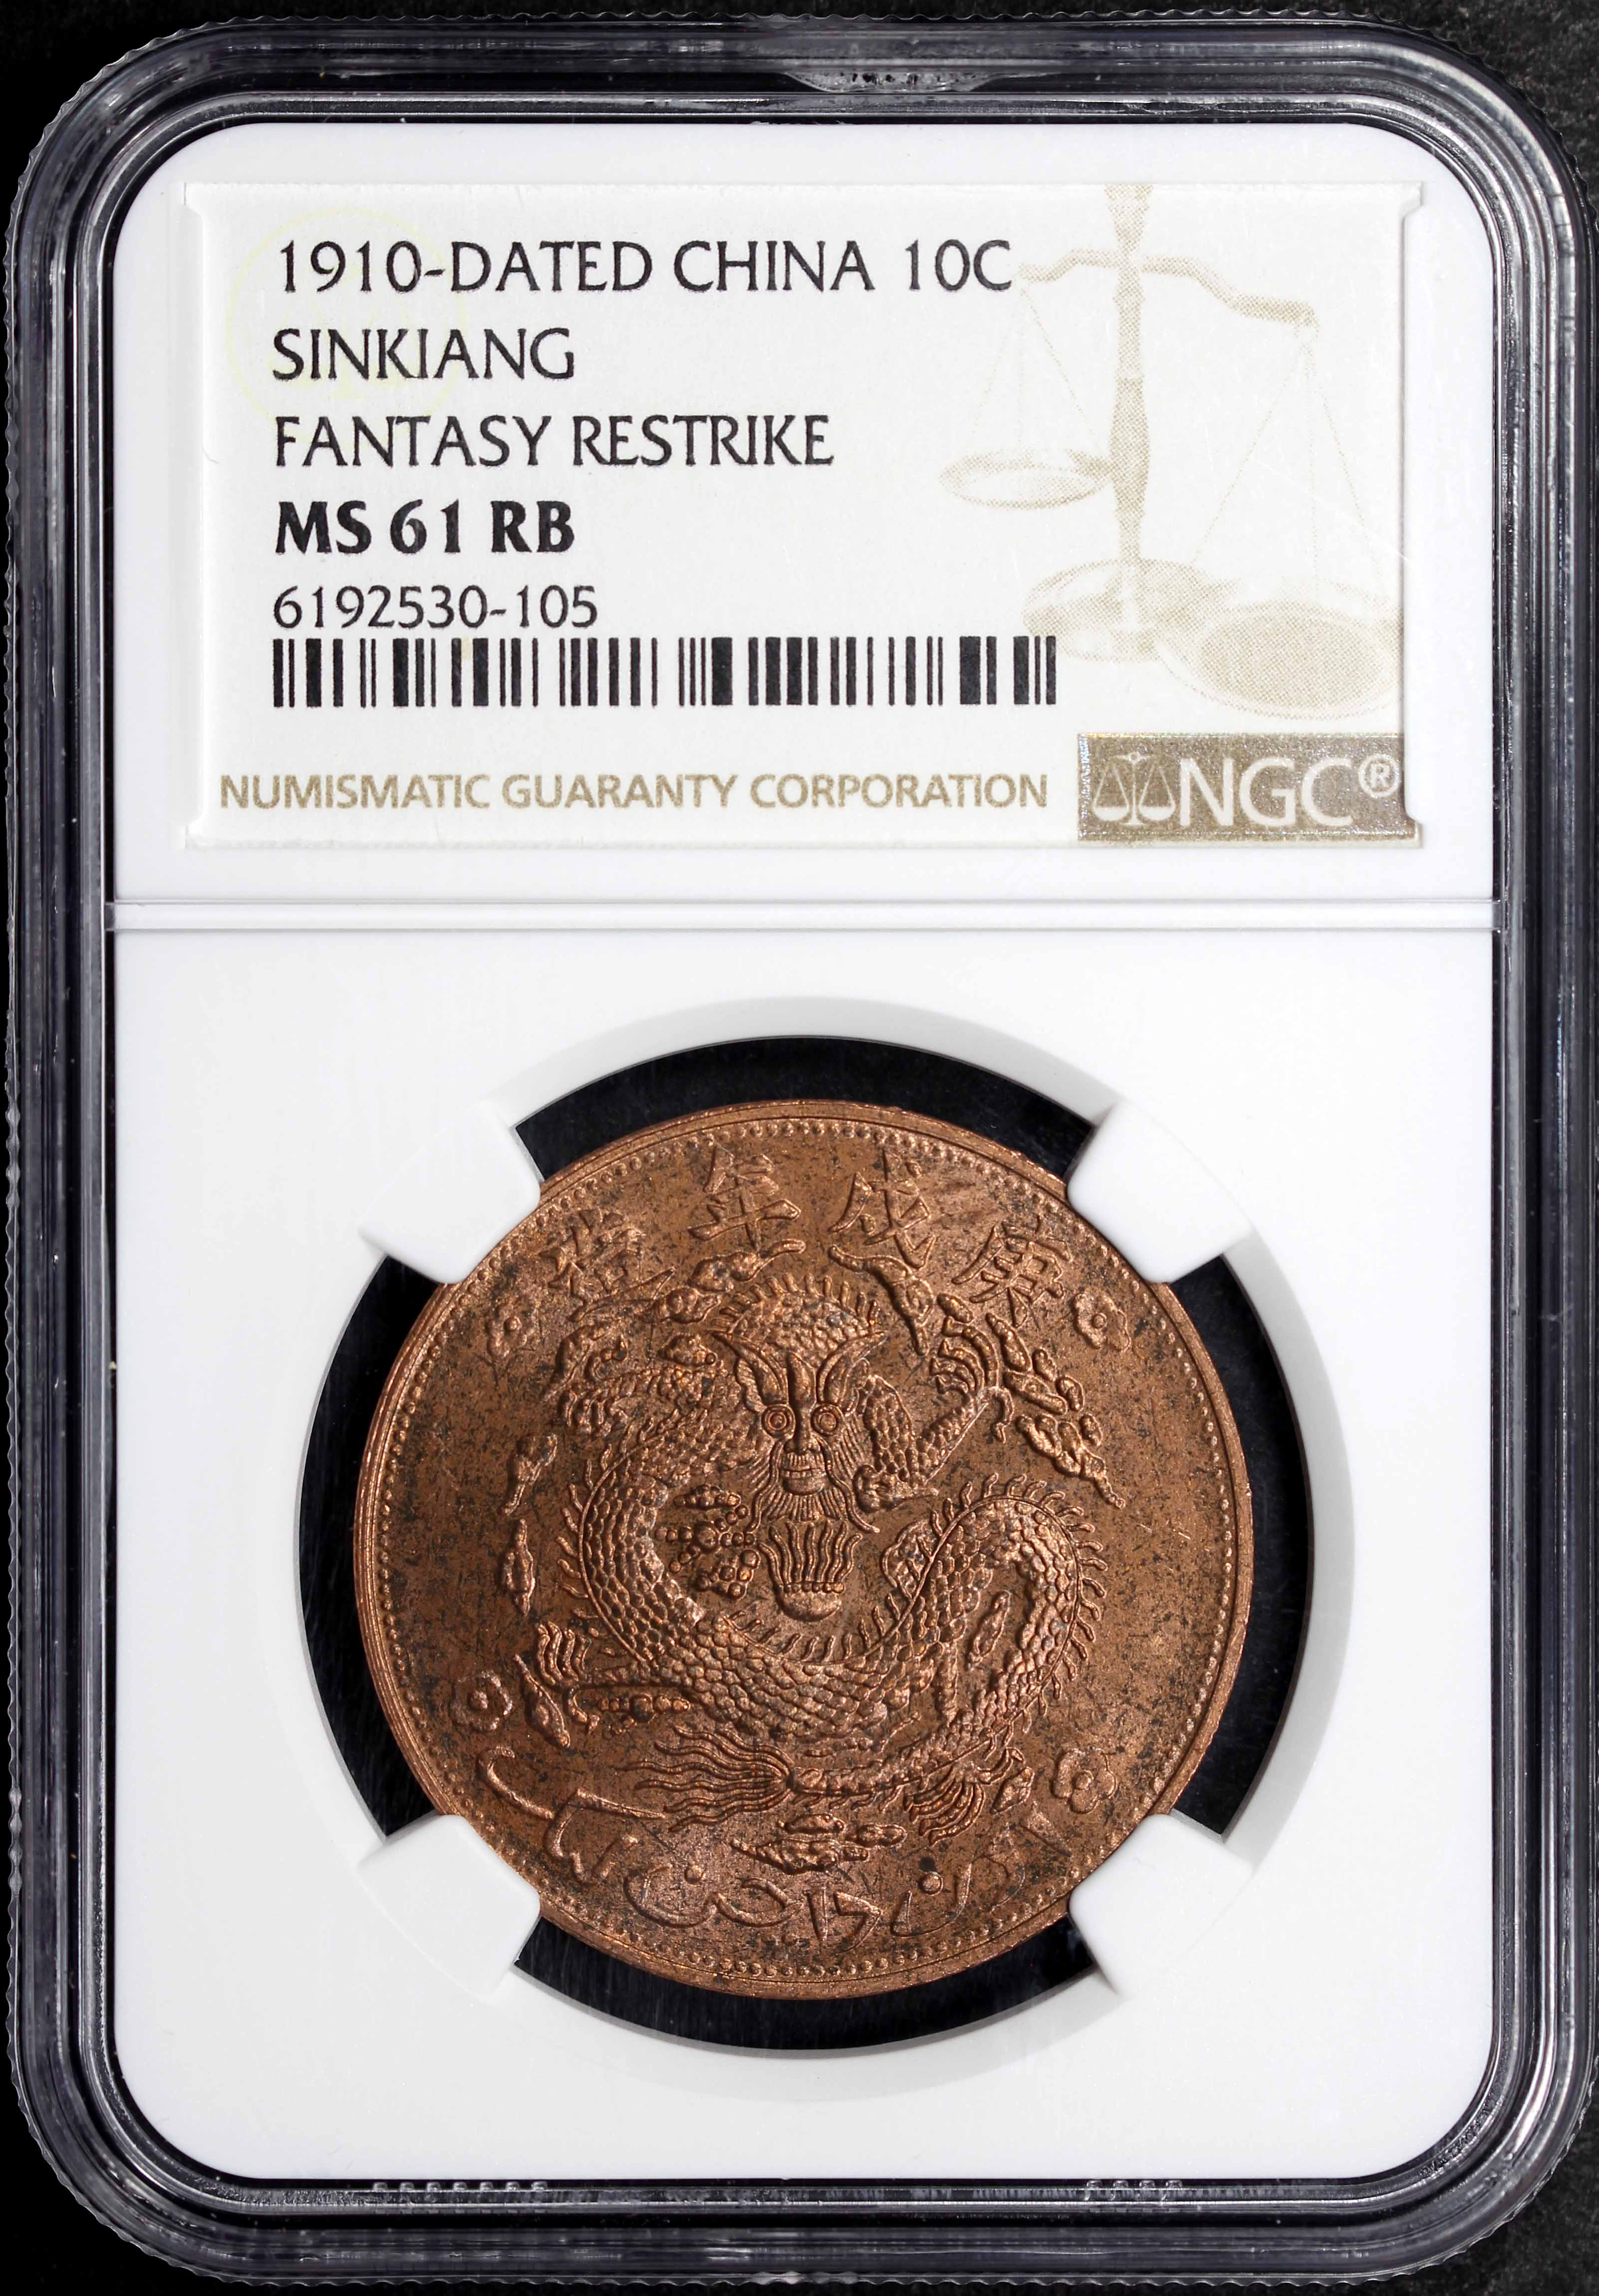 China, Sinkiang, 1910, 10 Cash, Fantasy restrike, NGC MS61RB 